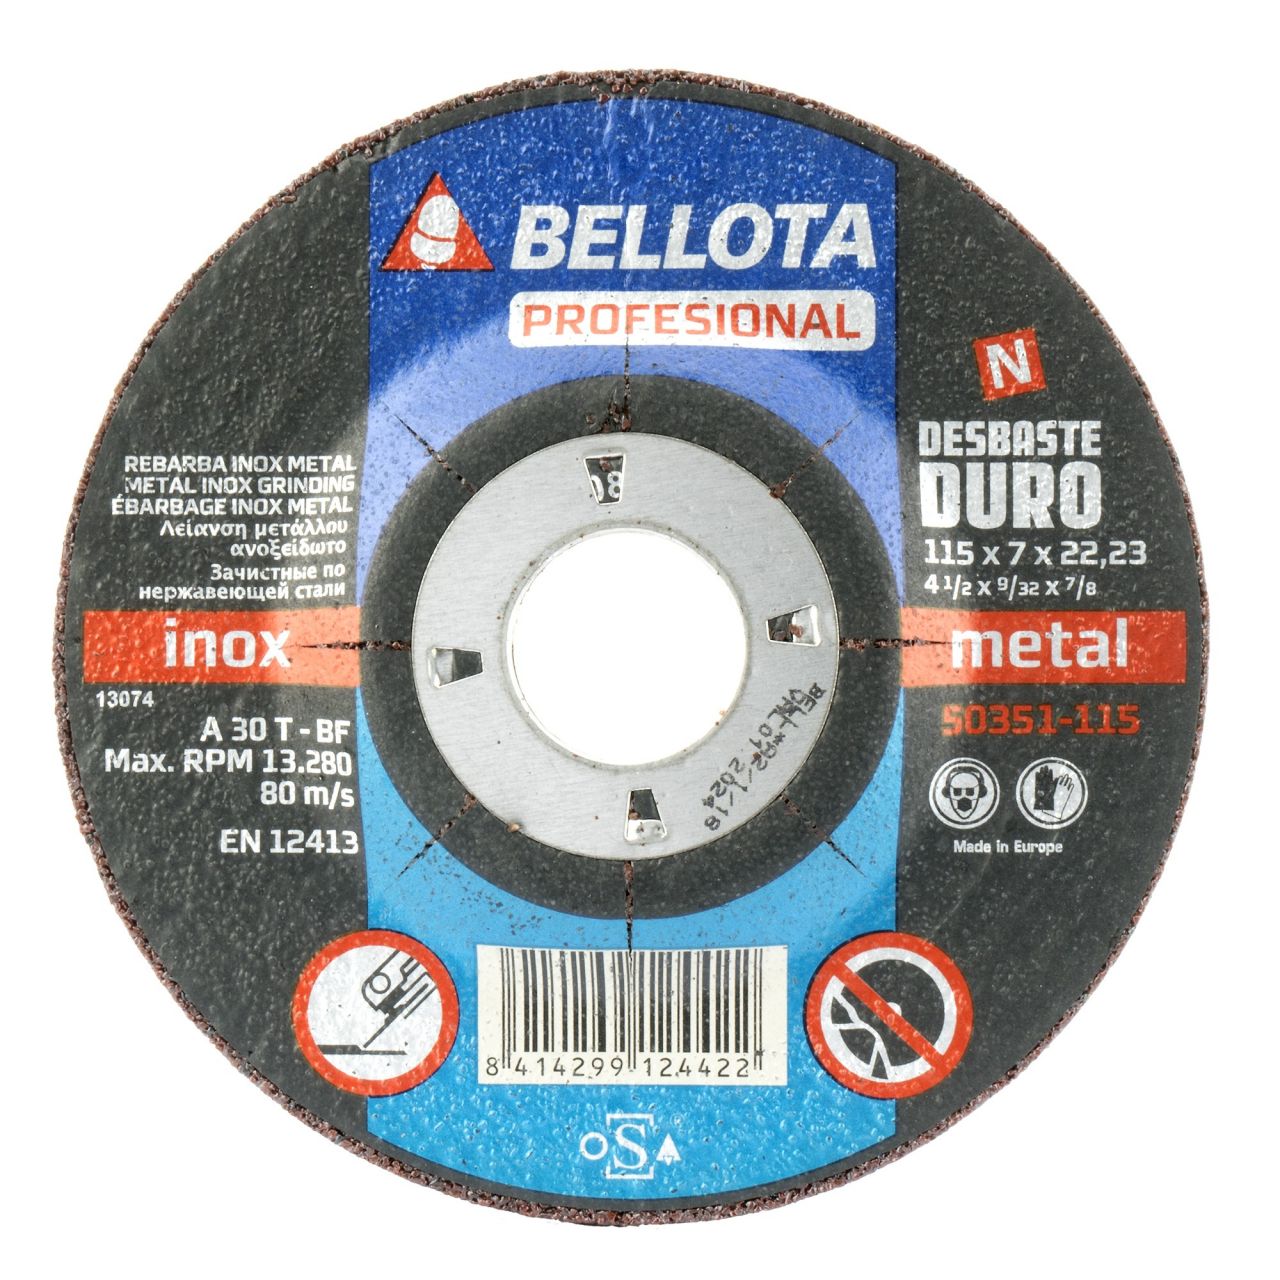 Disco abrasivo profesional para desbaste inox-metal, duro 7 mm y Ø 115 mm / 50351115